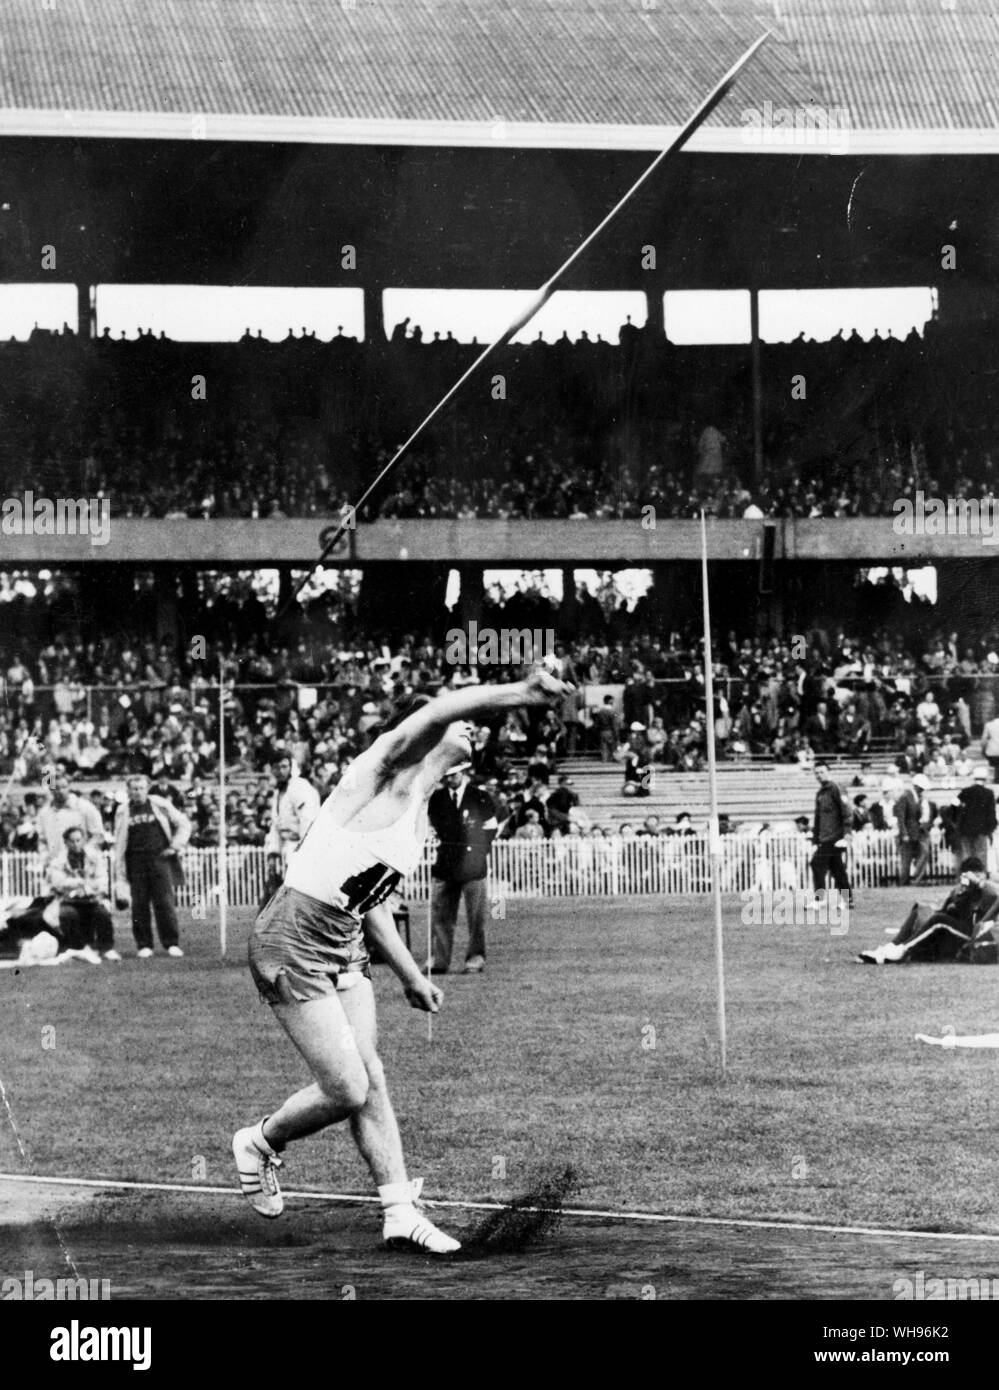 Aus., Melbourne, Olympics, 1956: Egil Danielsen's (Norway) winning throw in the javelin.. Stock Photo